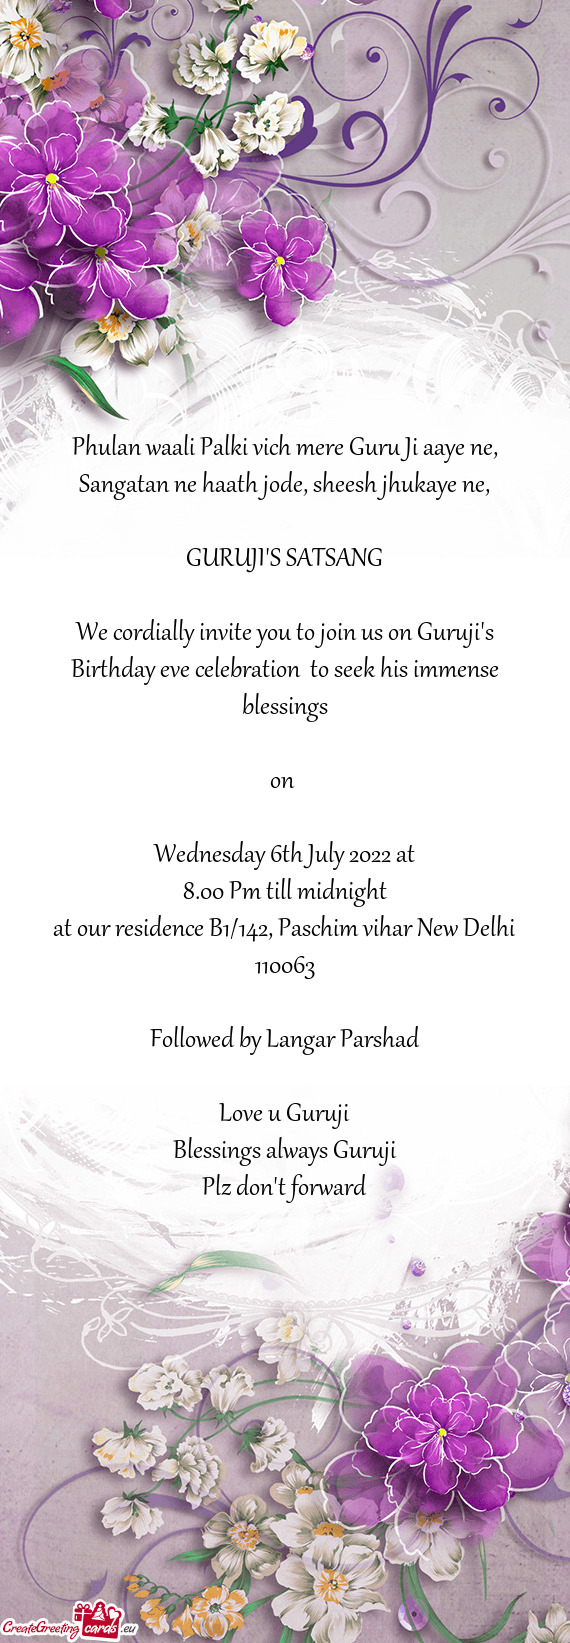 We cordially invite you to join us on Guruji